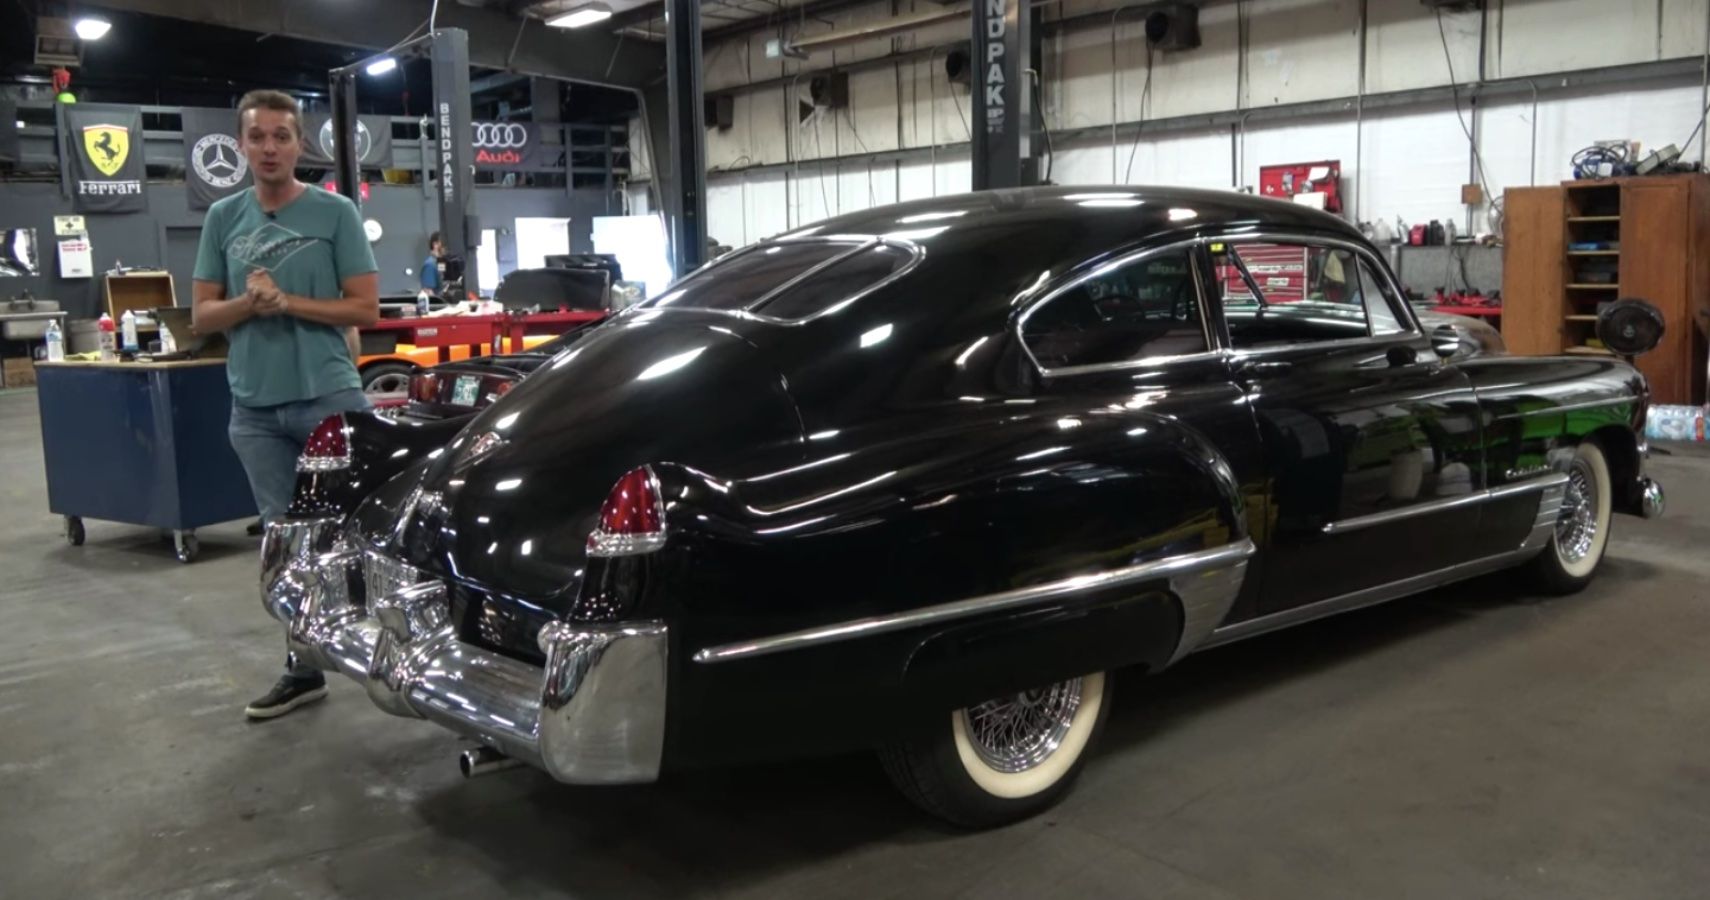 Black Cadillac, black, in garage, rear quarter view